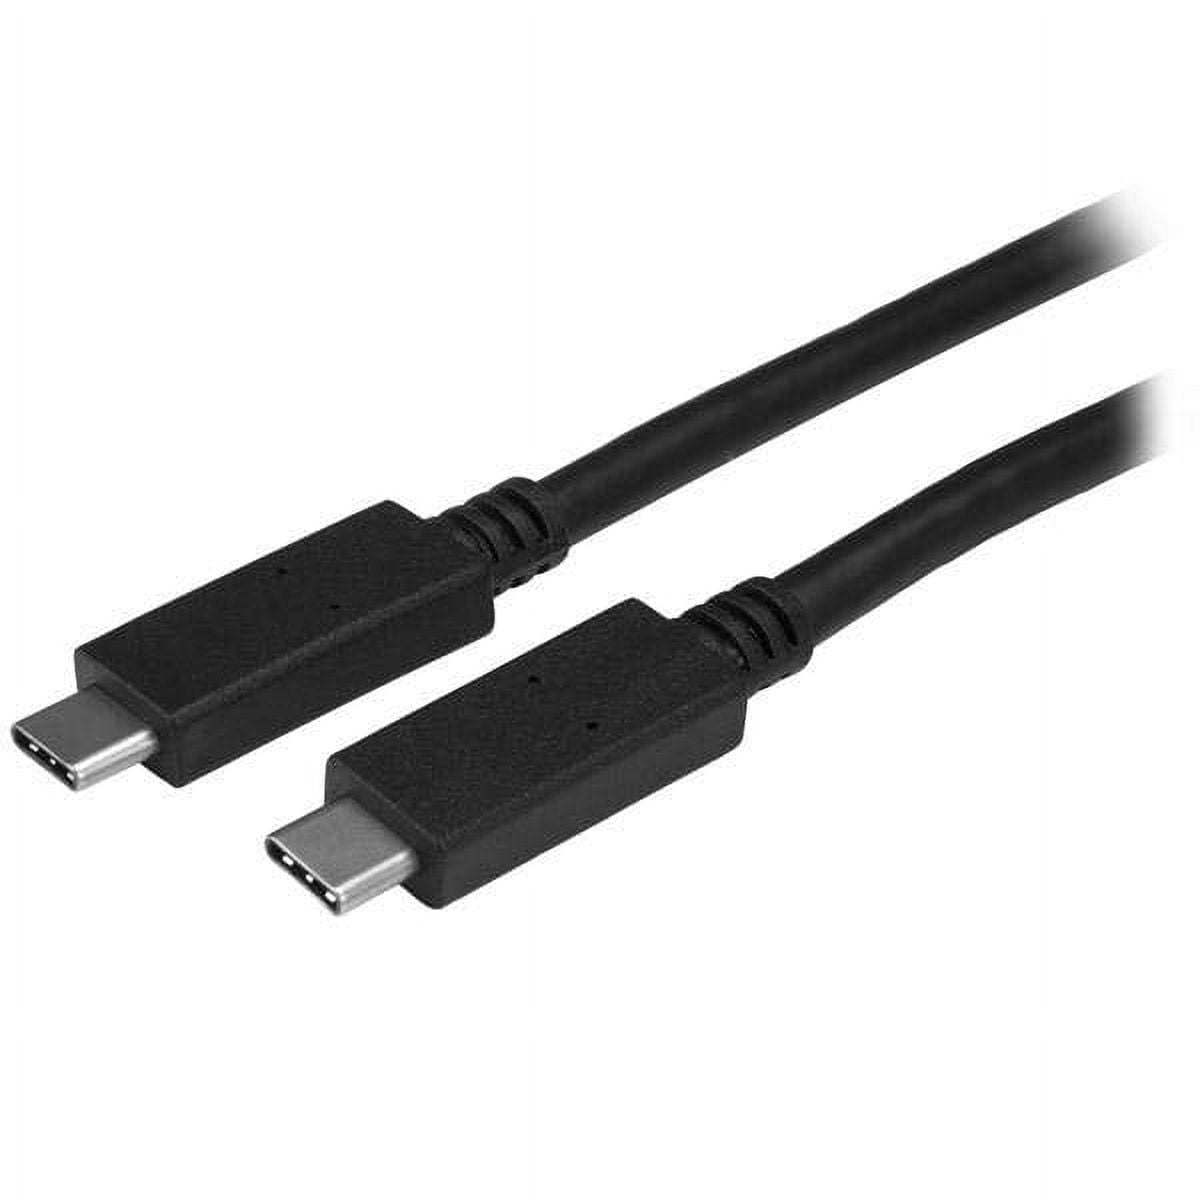 USB 3.1 Type C Cable - USB 3.1 Gen 2 